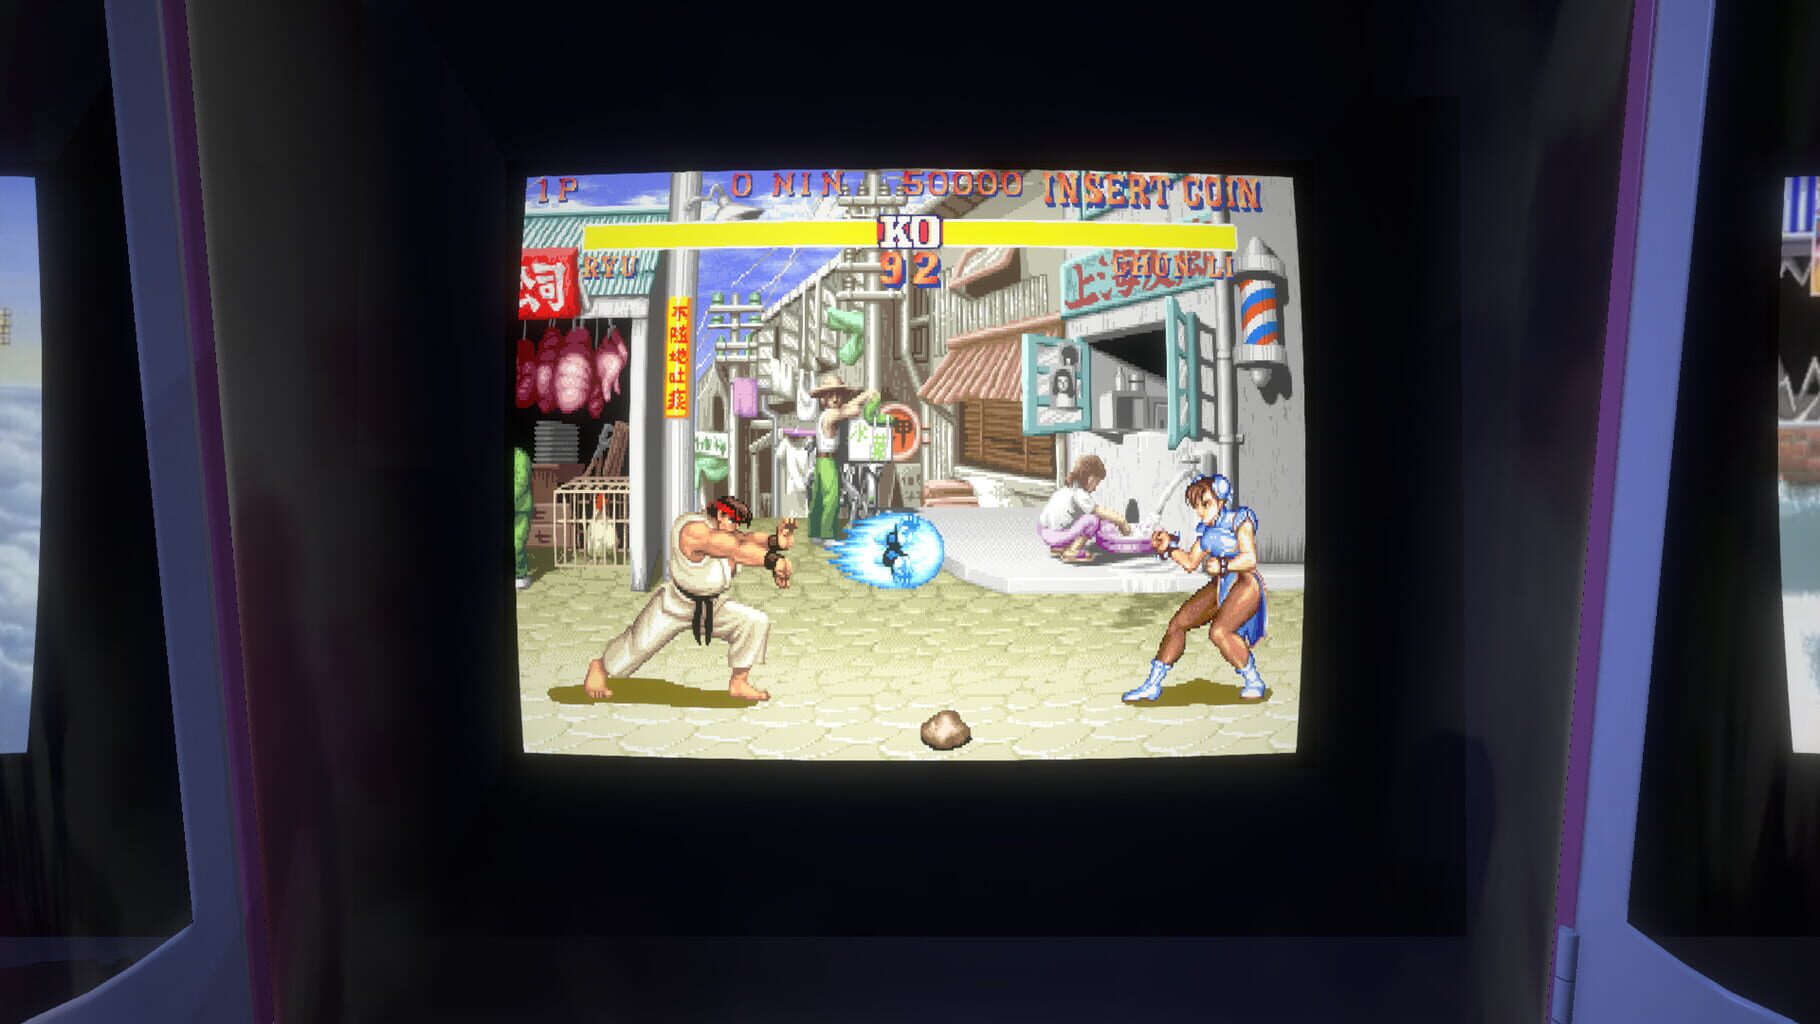 Capcom Arcade Stadium: Street Fighter II - The World Warrior screenshot